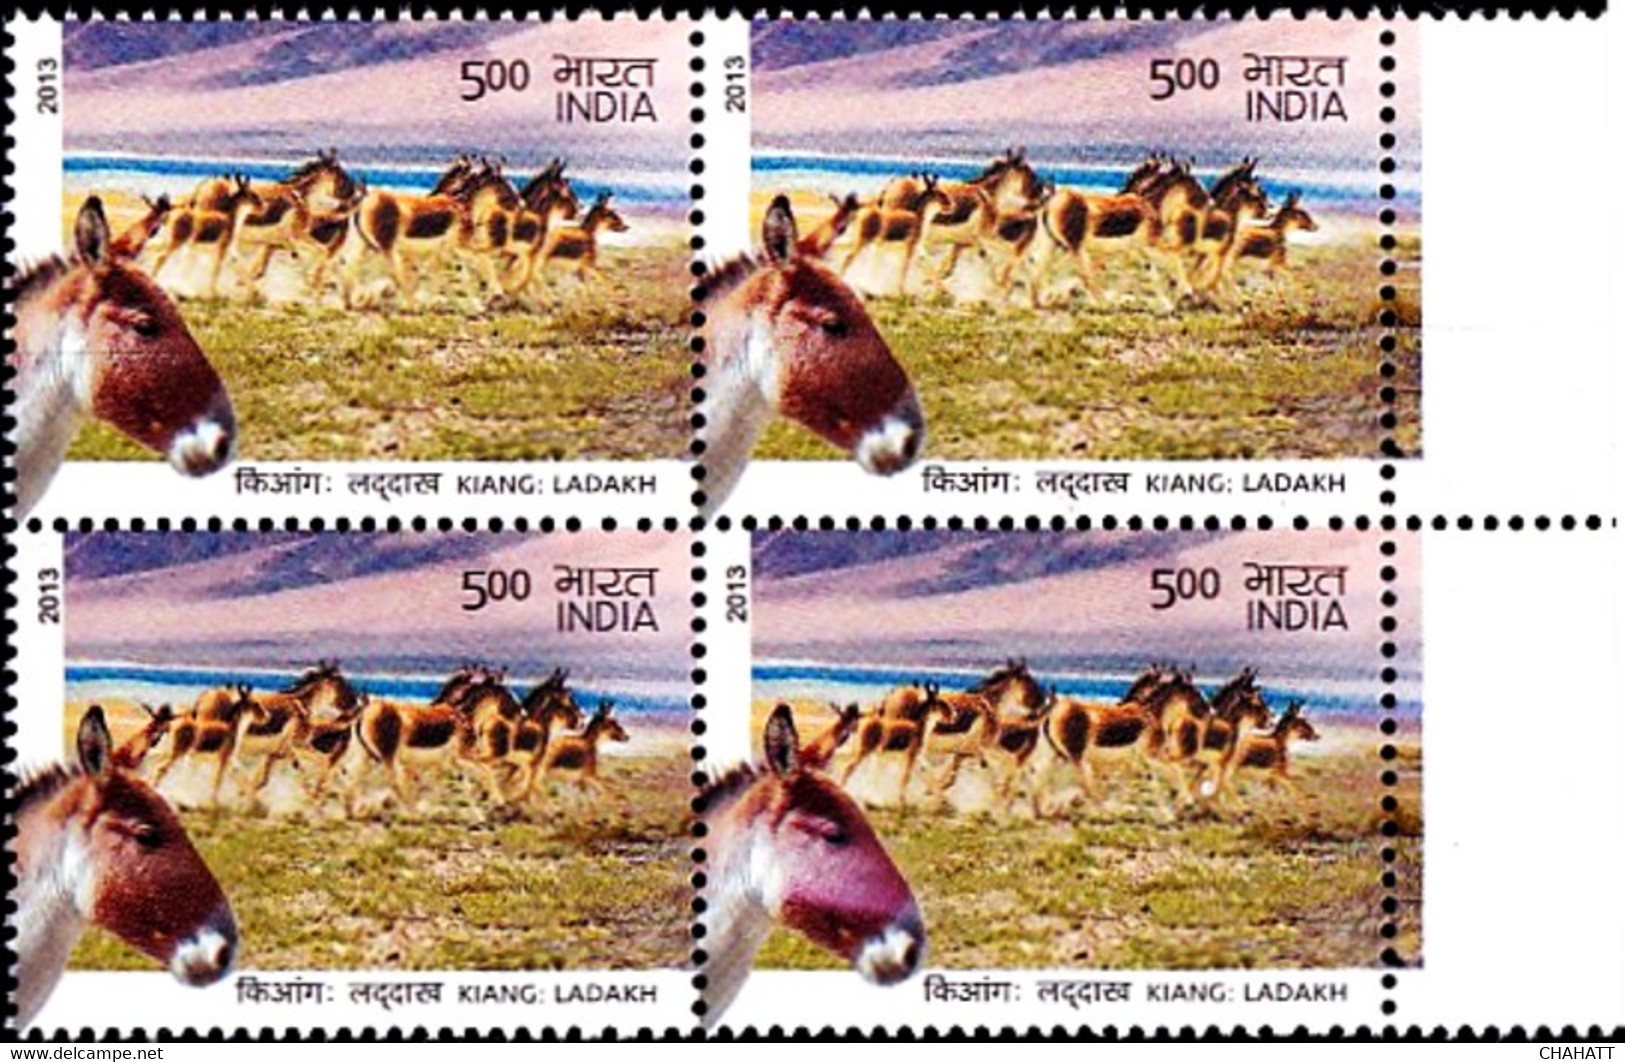 DONKEYS- ASS OF KUTCH-INDIA BLOCK OF 4- 500p- ERROR-VARIETY- MNH- INDIA-2013-MNH-B3-1047 - Donkeys